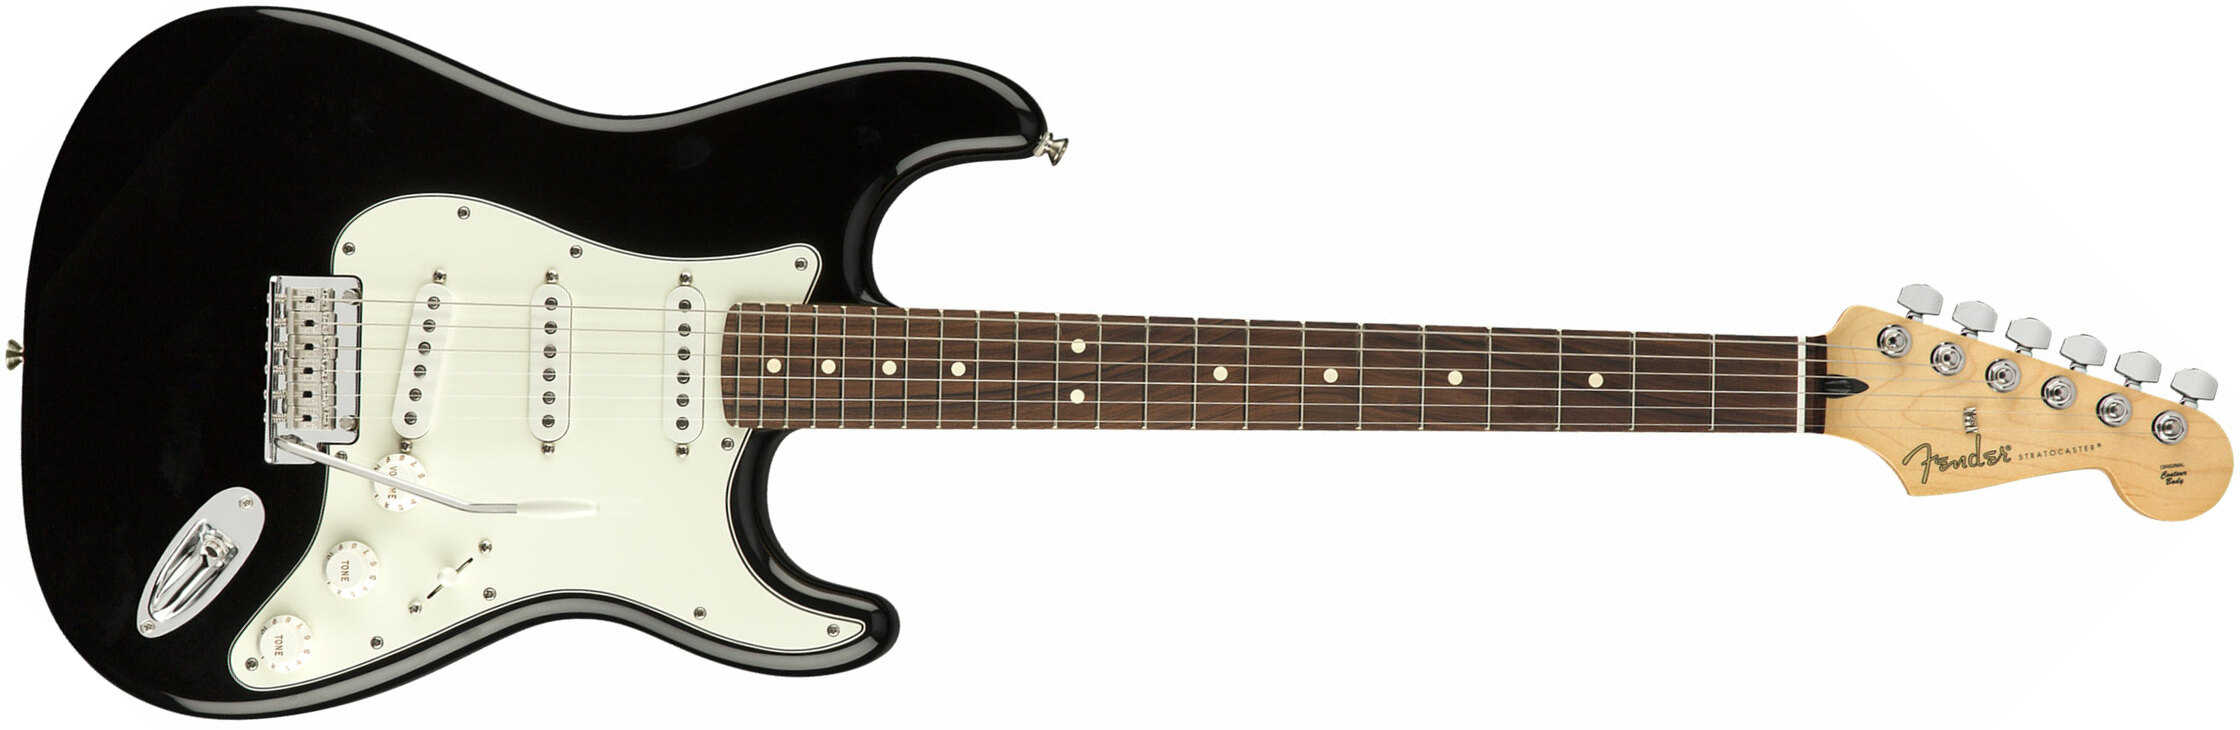 Fender Strat Player Mex Sss Pf - Black - Guitarra eléctrica con forma de str. - Main picture